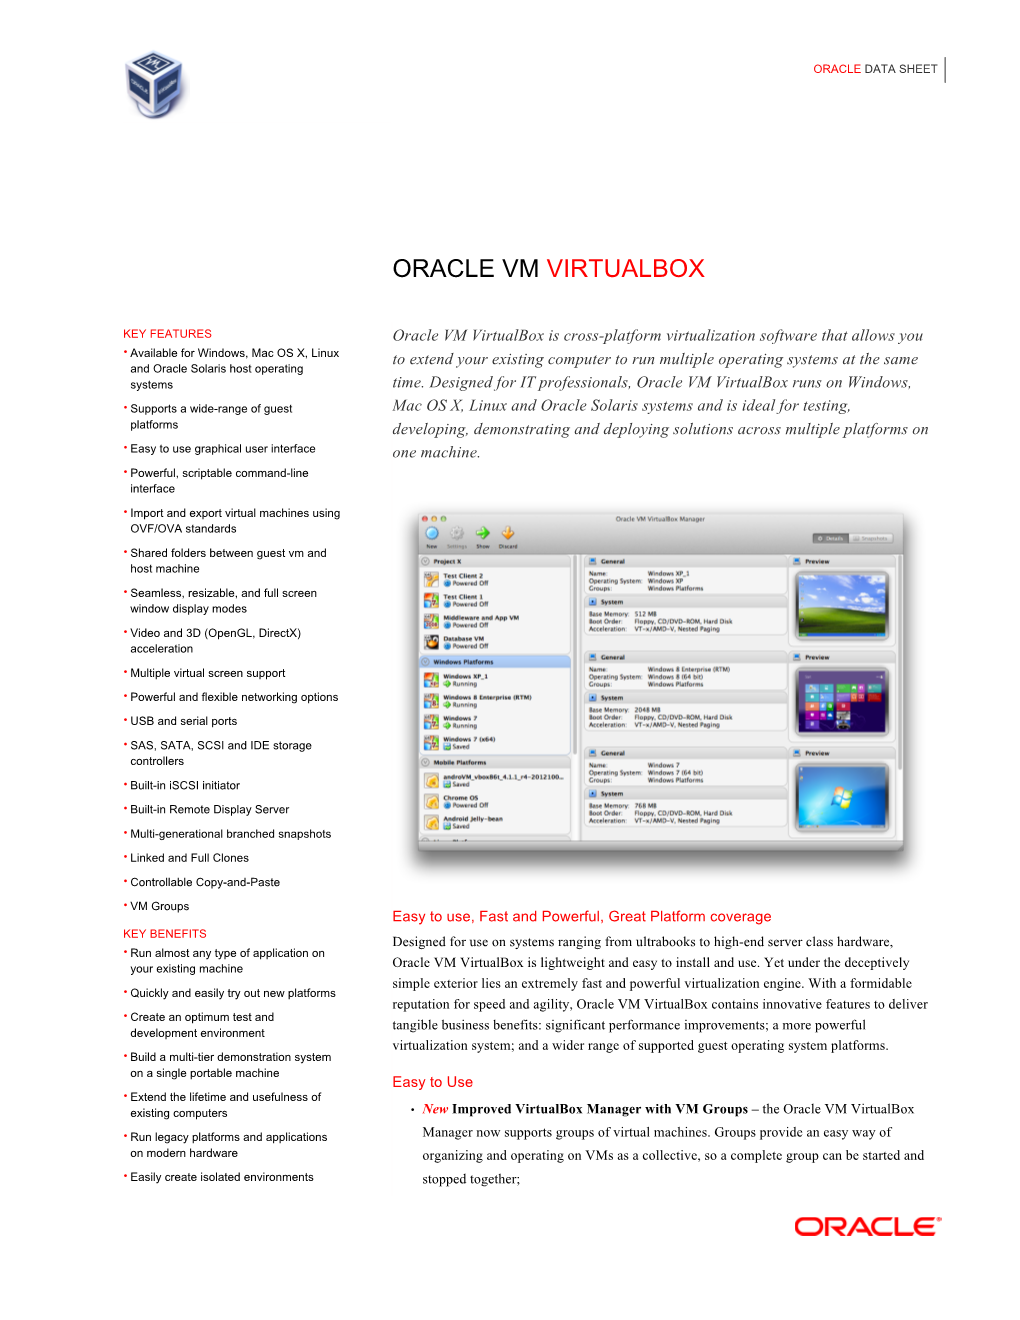 Oracle VM Virtualbox Data Sheet